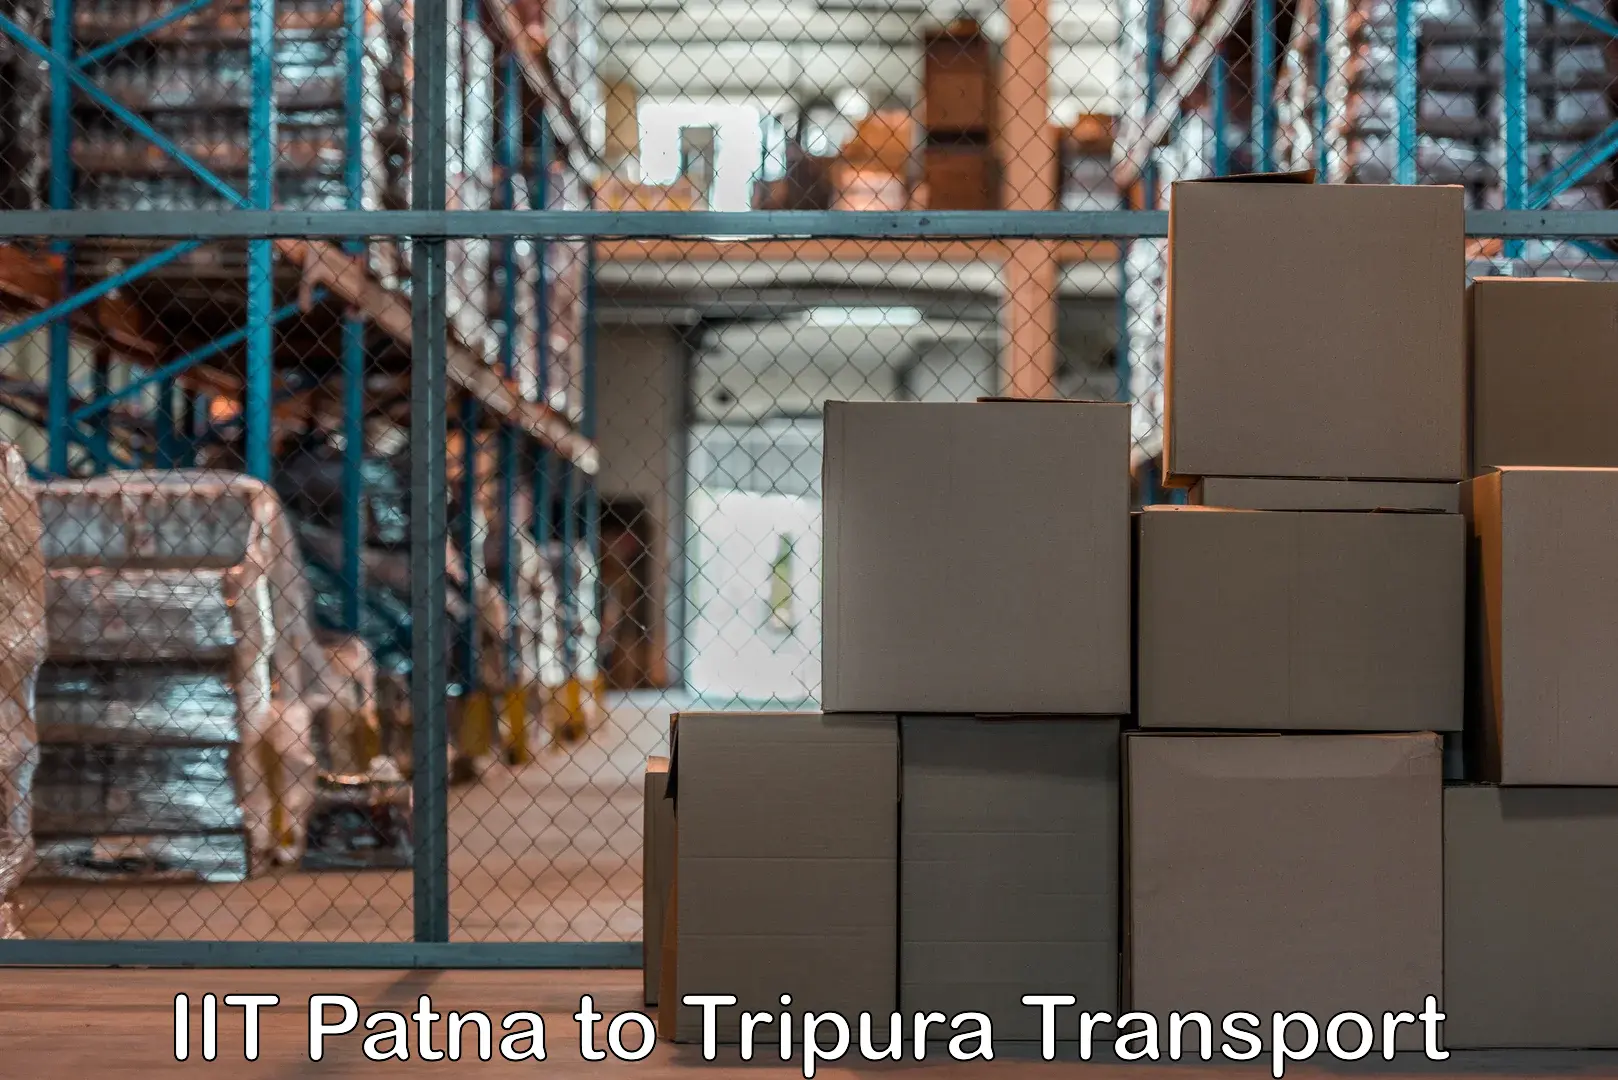 Online transport service IIT Patna to Tripura